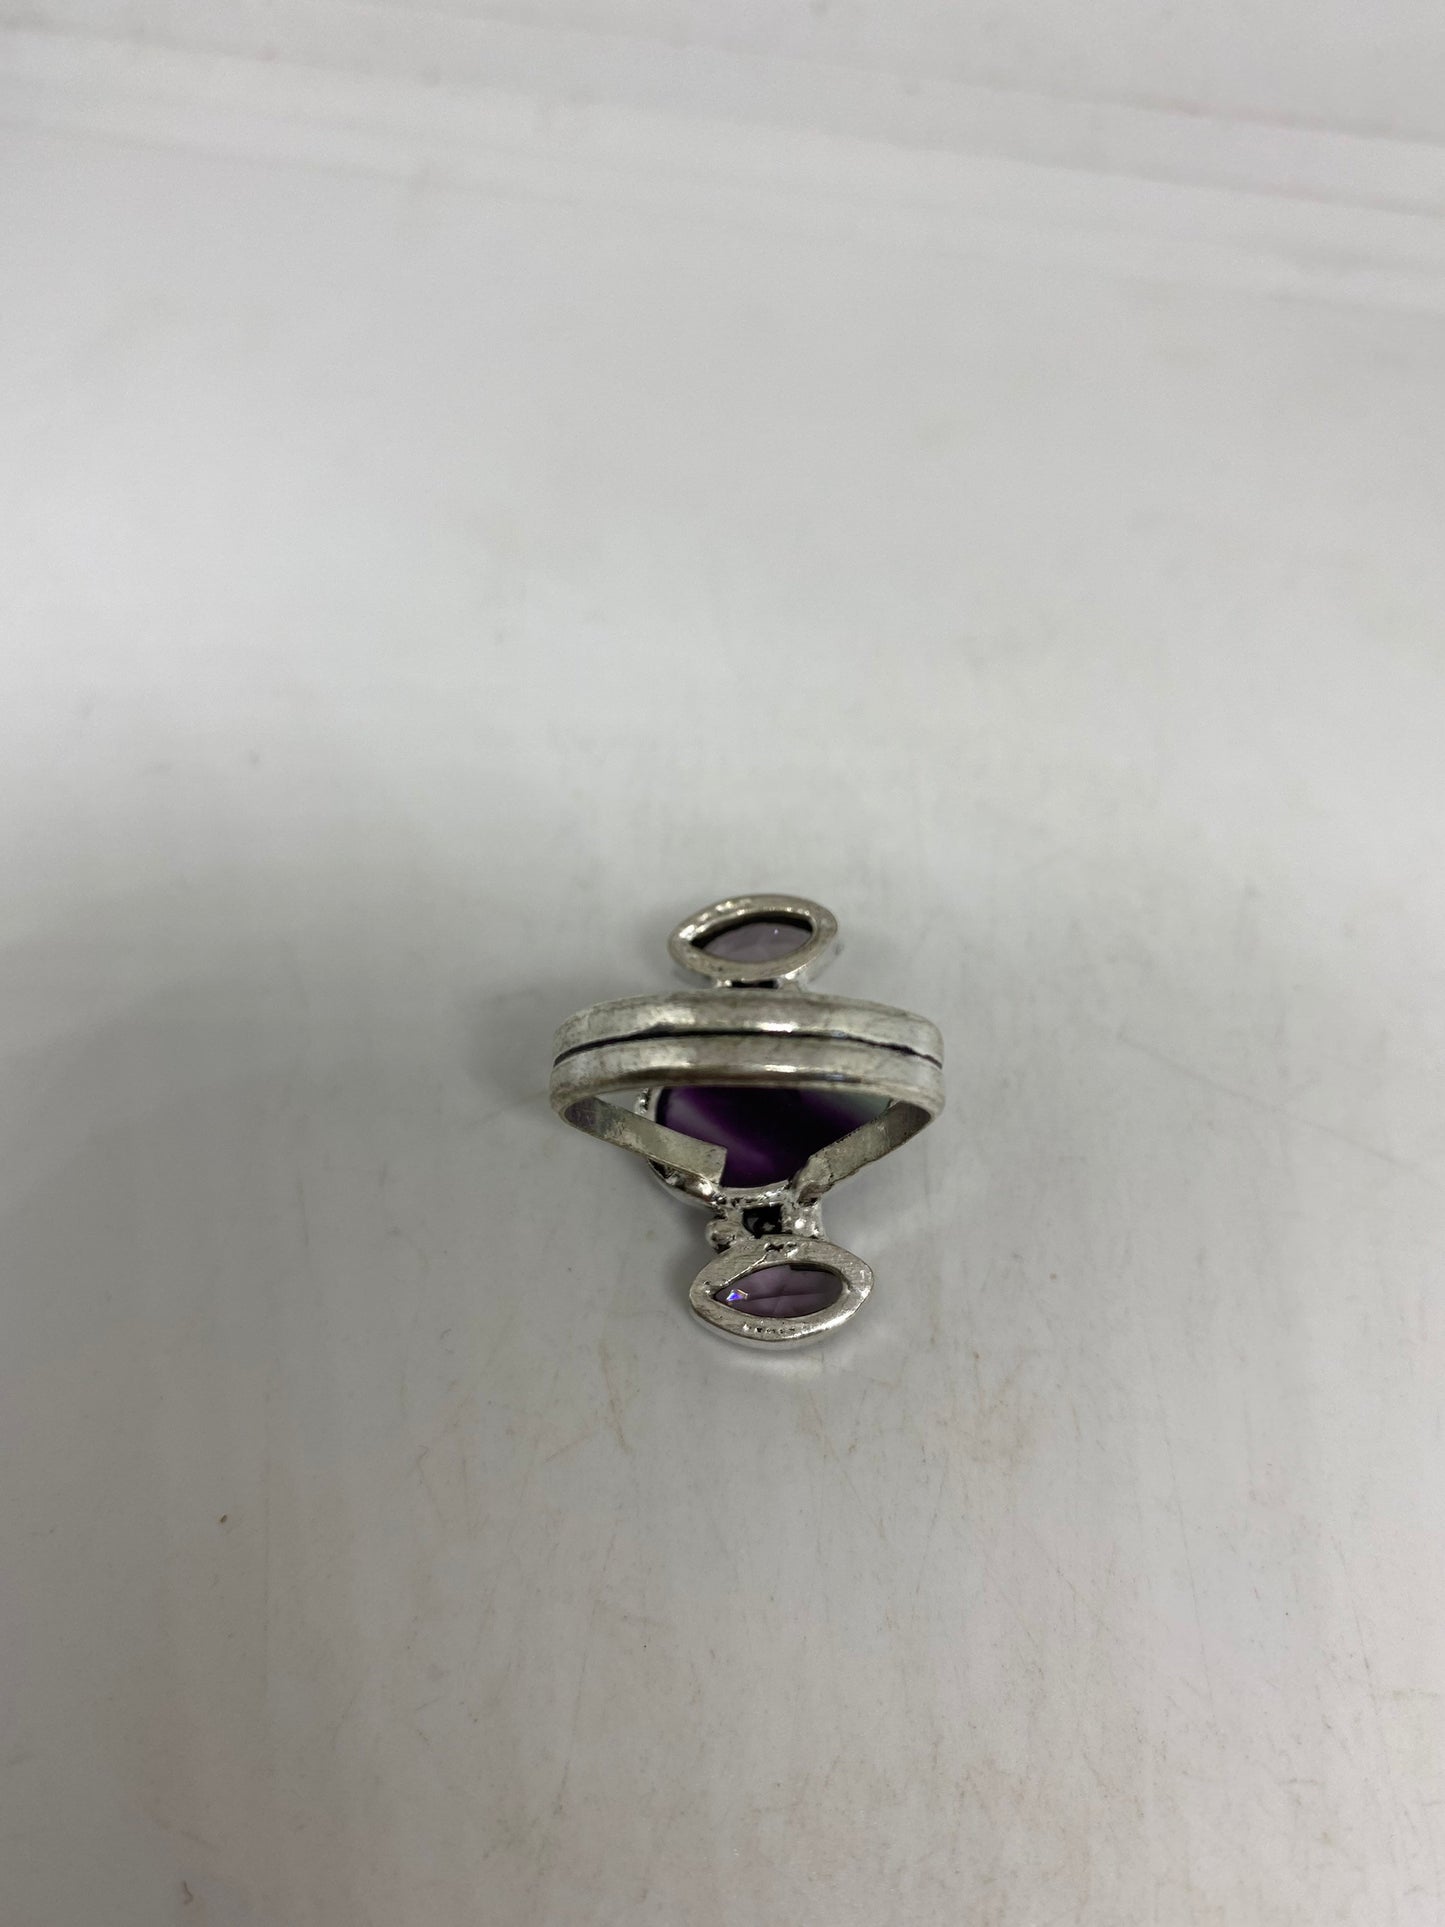 Vintage Genuine Purple Amethyst and Fluorite Ring